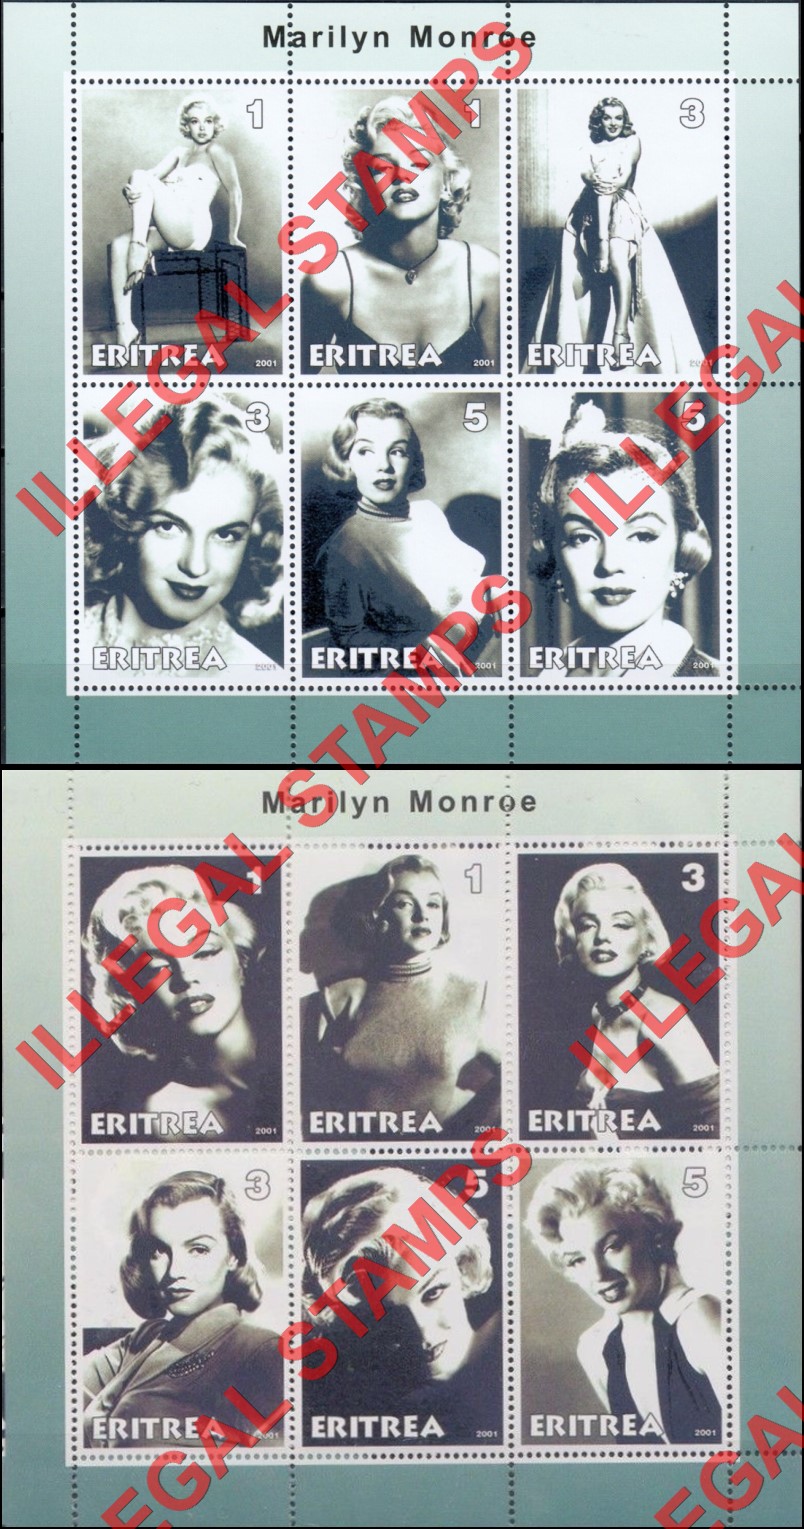 Eritrea 2001 Marilyn Monroe Counterfeit Illegal Stamp Souvenir Sheets of 6